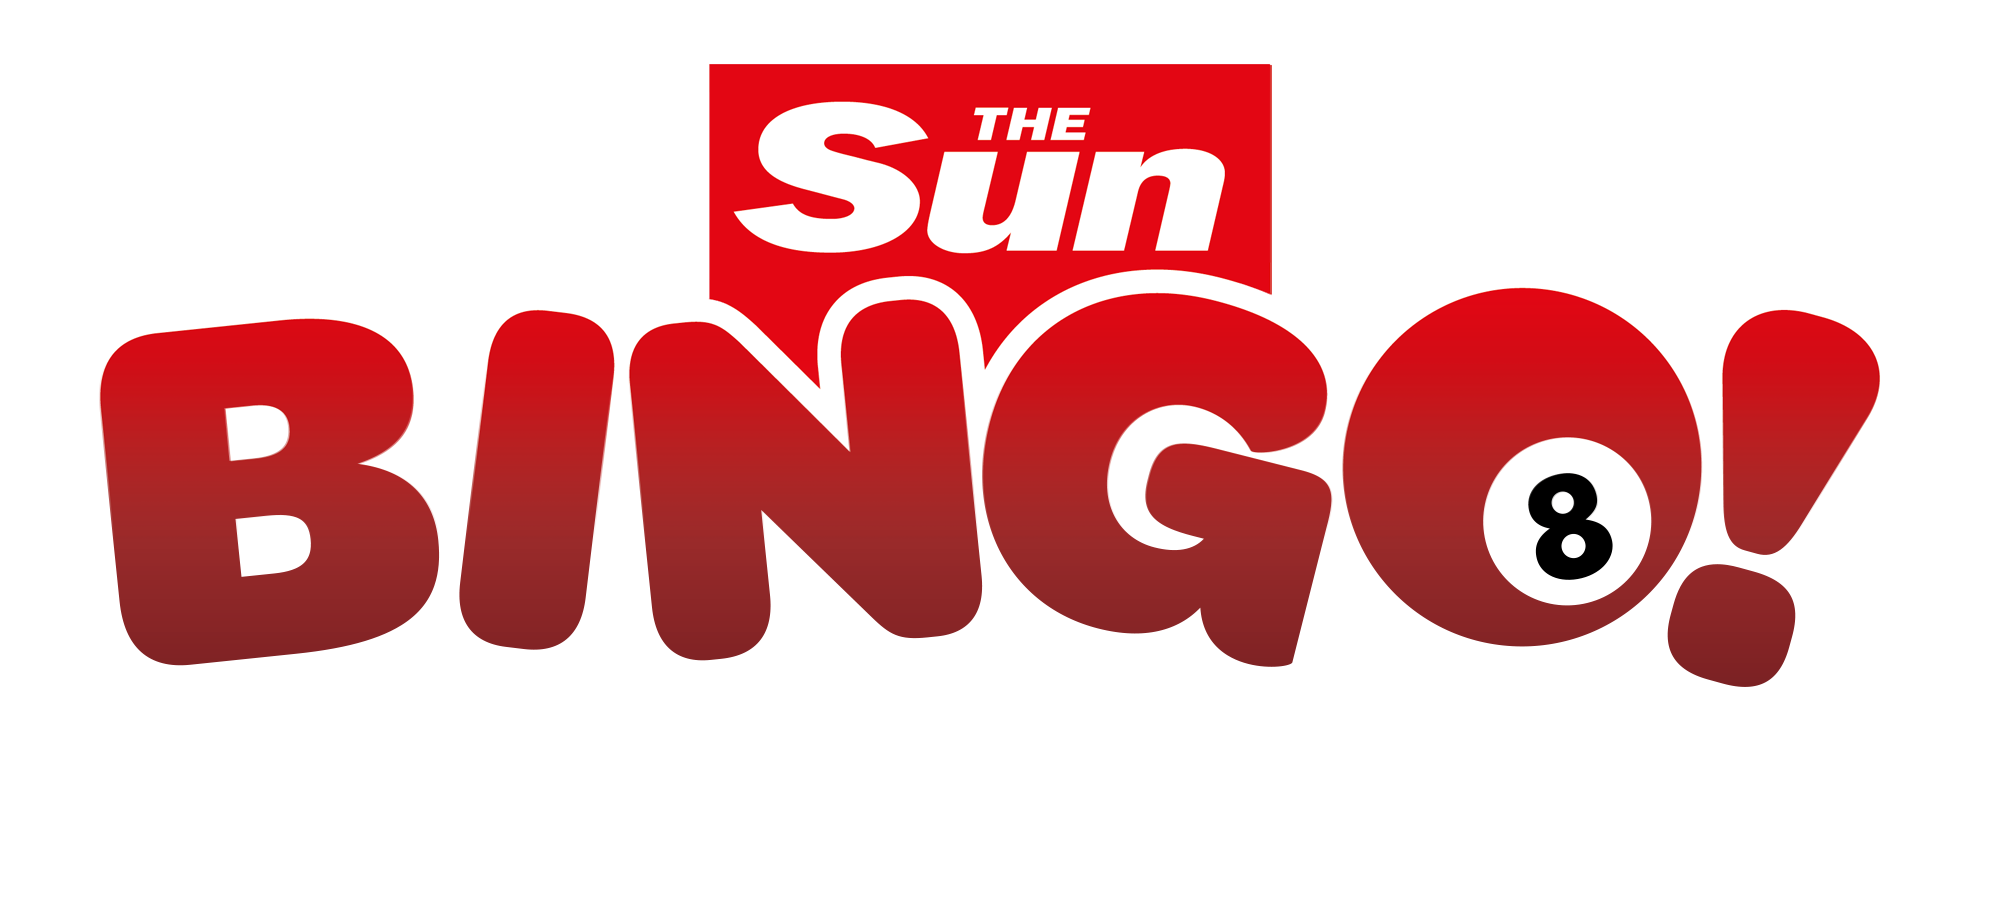 Sun Bingo Bonus Codes (2021) Who Wants a £50 Signup Bonus?